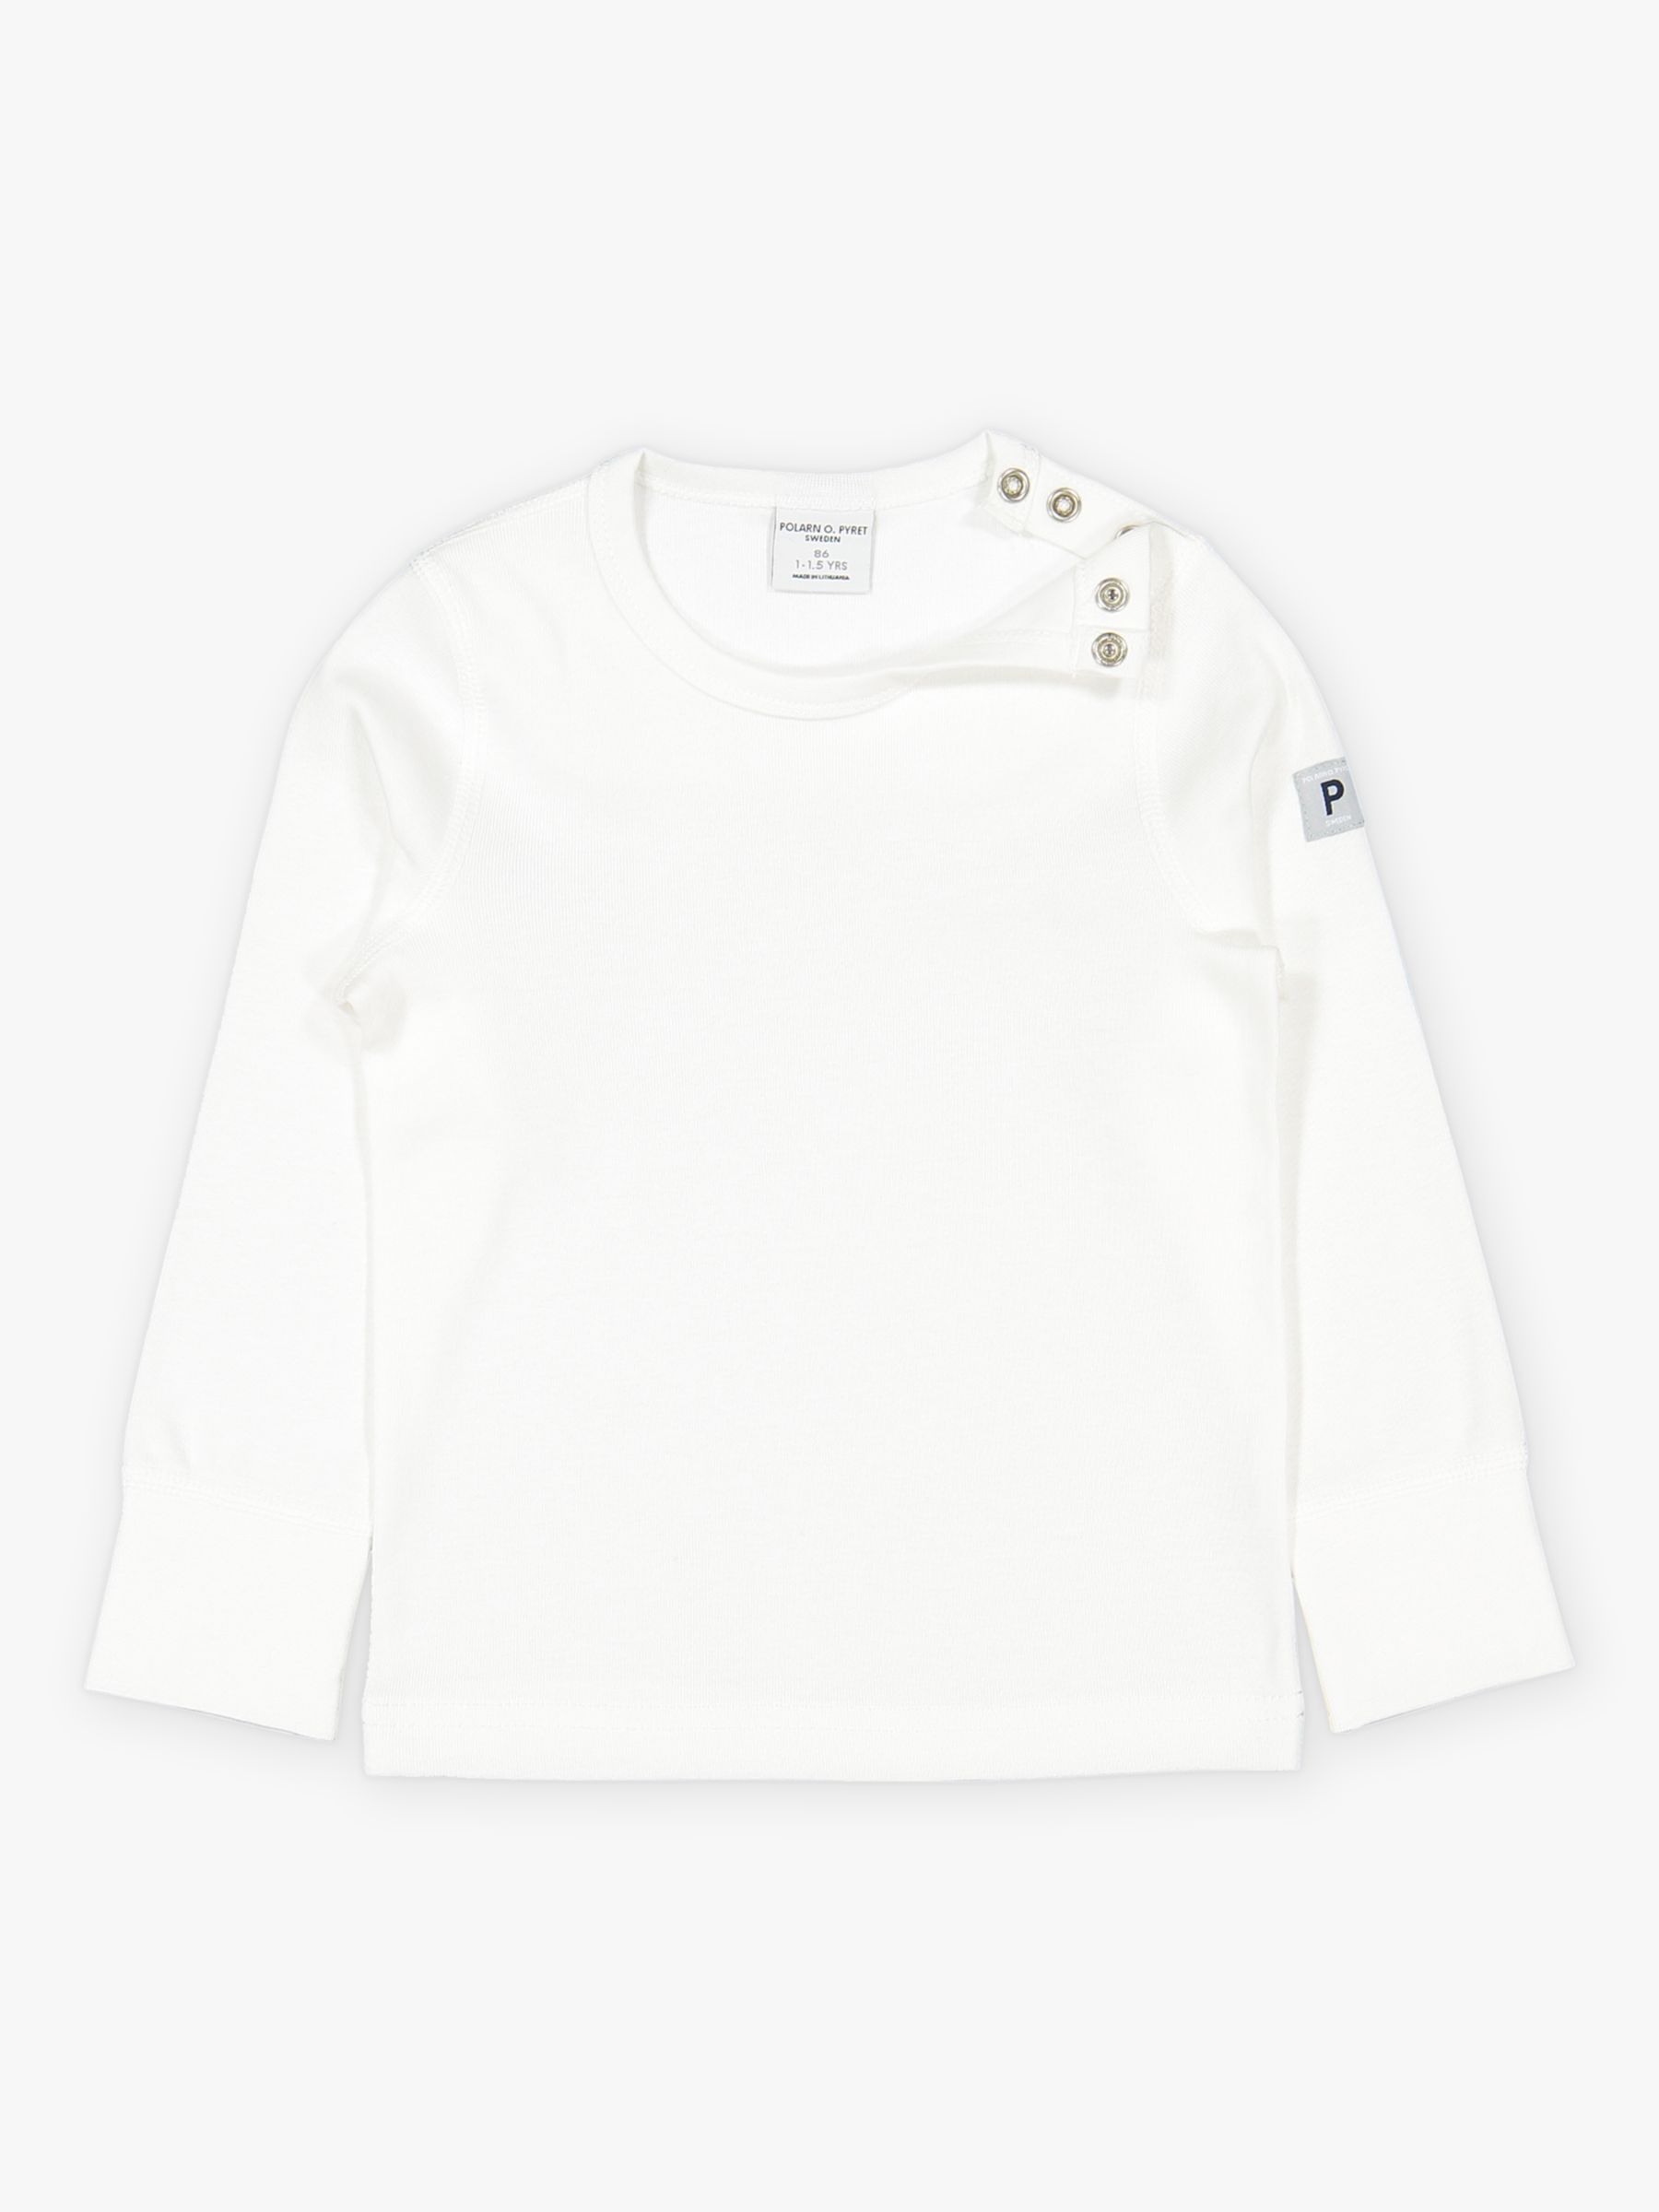 Buy Polarn O. Pyret Baby GOTS Organic Cotton Long Sleeve T-Shirt Online at johnlewis.com